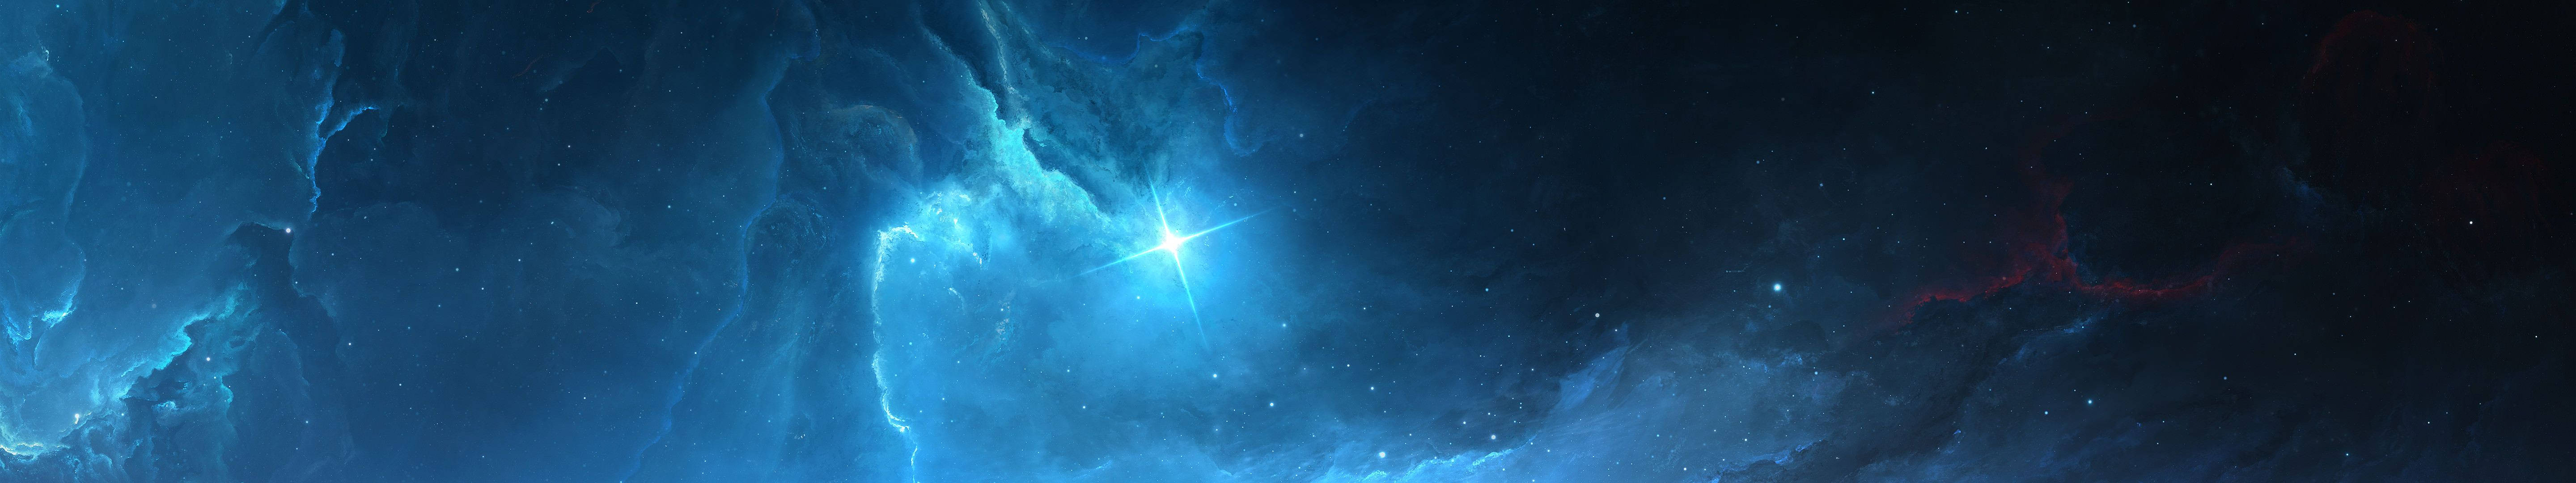 Twinkling Star In Blue Galaxy Background